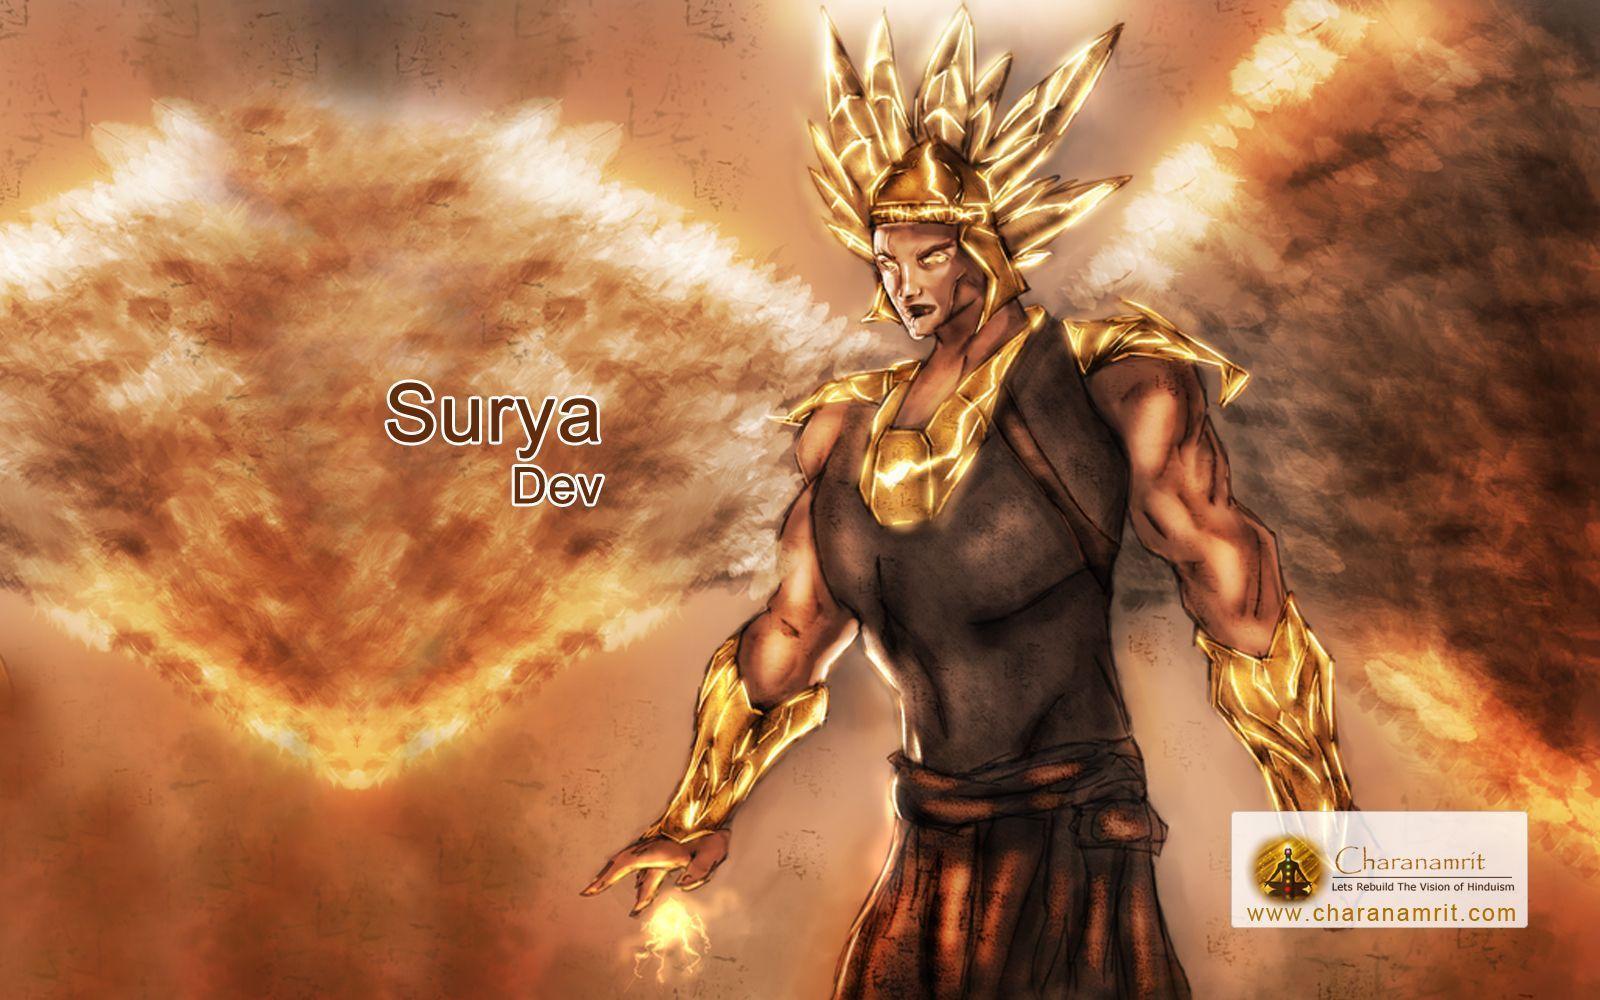 Surya Dev most imaging HD Wallpaper for free download, God Surya